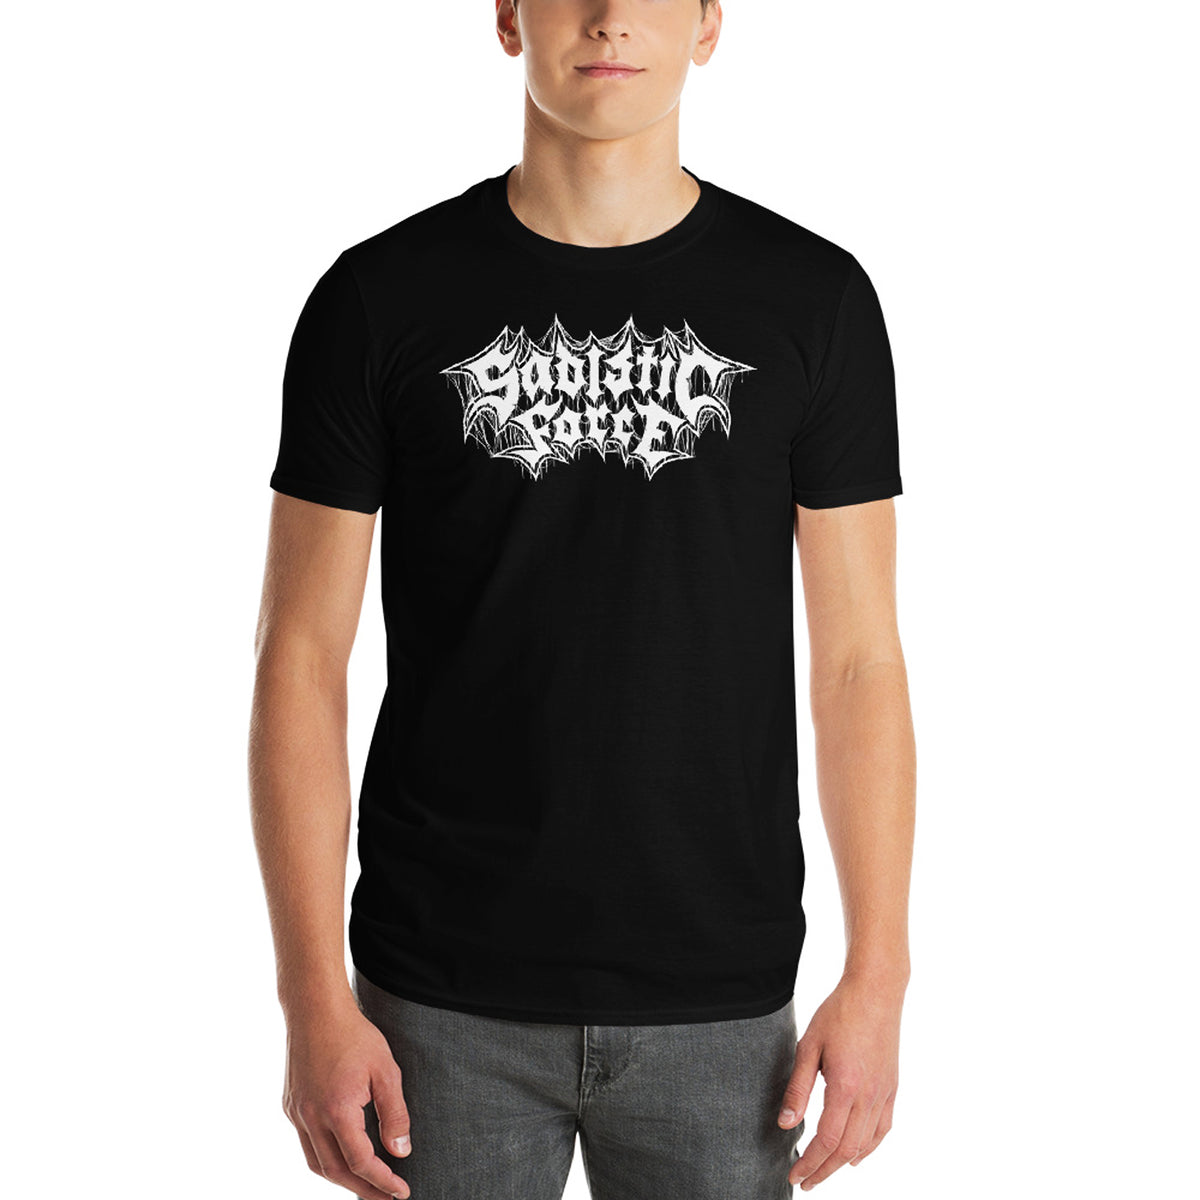 SADISTIC FORCE - Logo Black T-Shirt – Horror Pain Gore Death ...